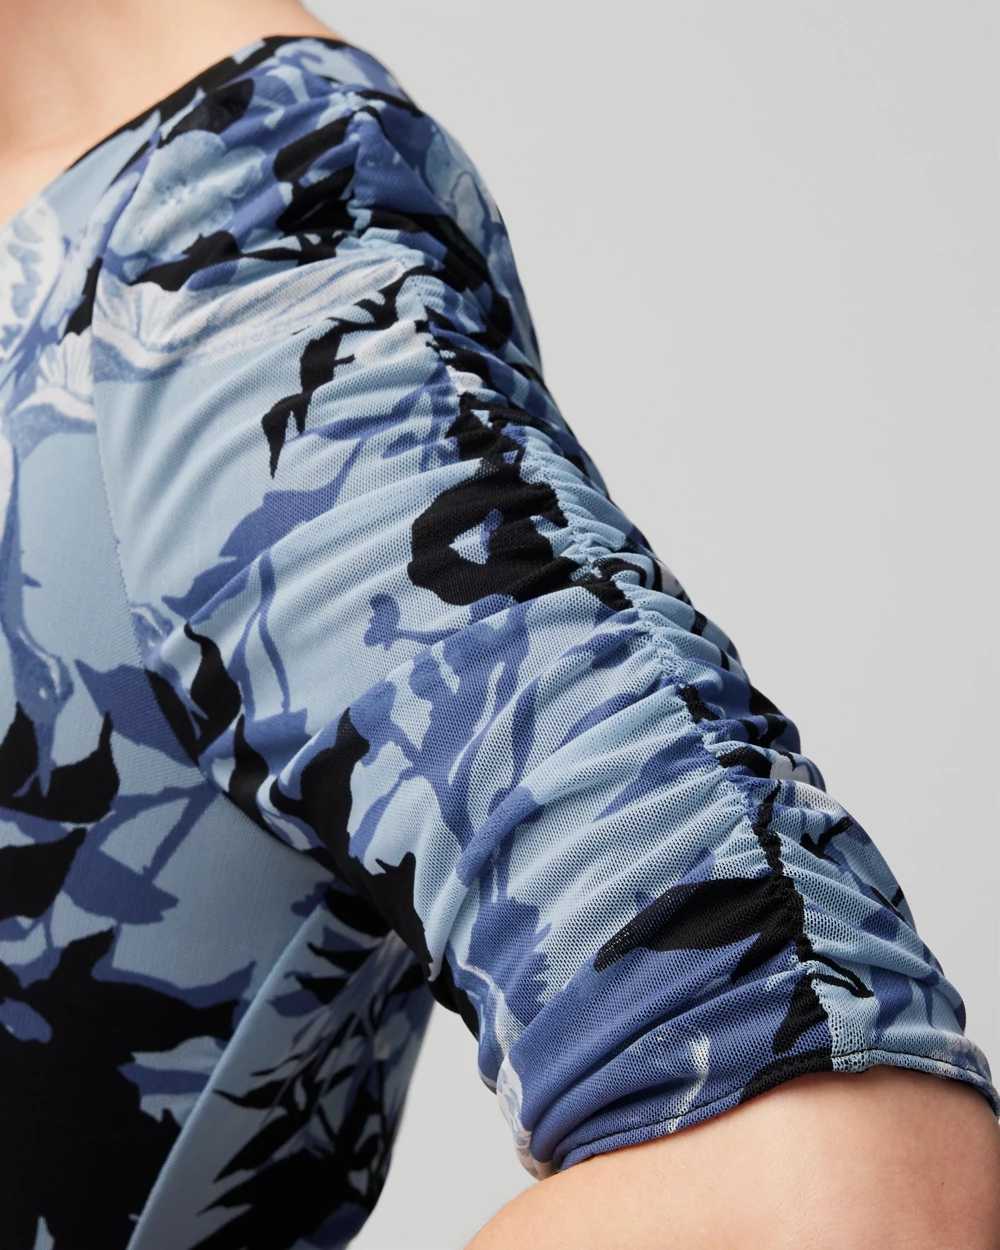 Petite Shirred Mesh Midi Dress click to view larger image.